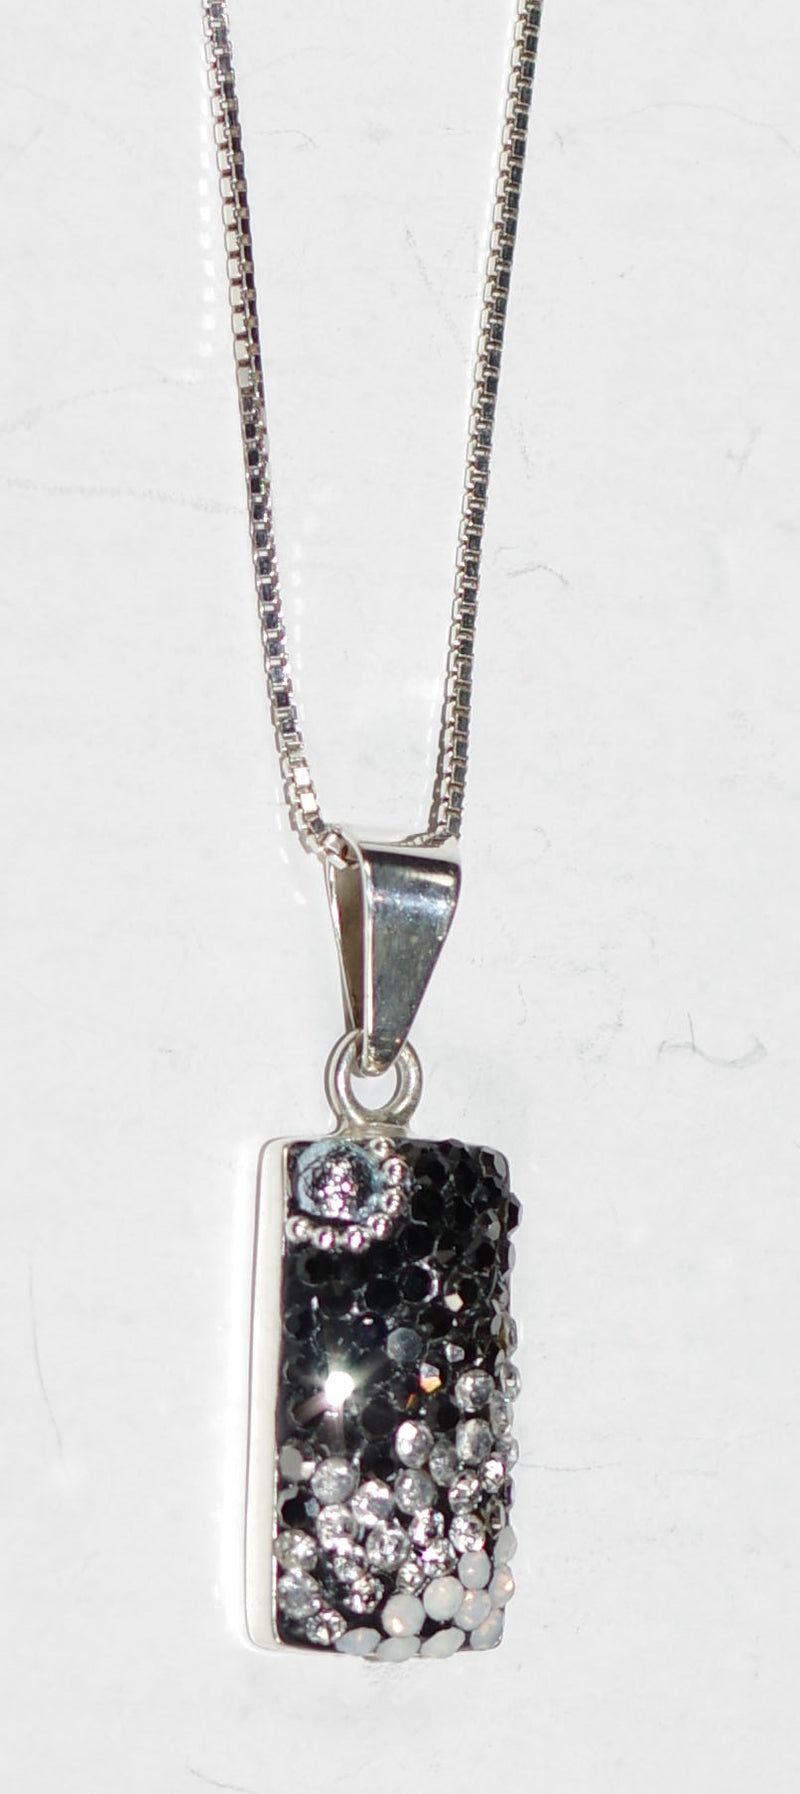 MOSAICO PENDANT PP-8548-H: multi color Austrian crystals in 3/4" solid silver pendant, 18-20 inch adjustable silver chain